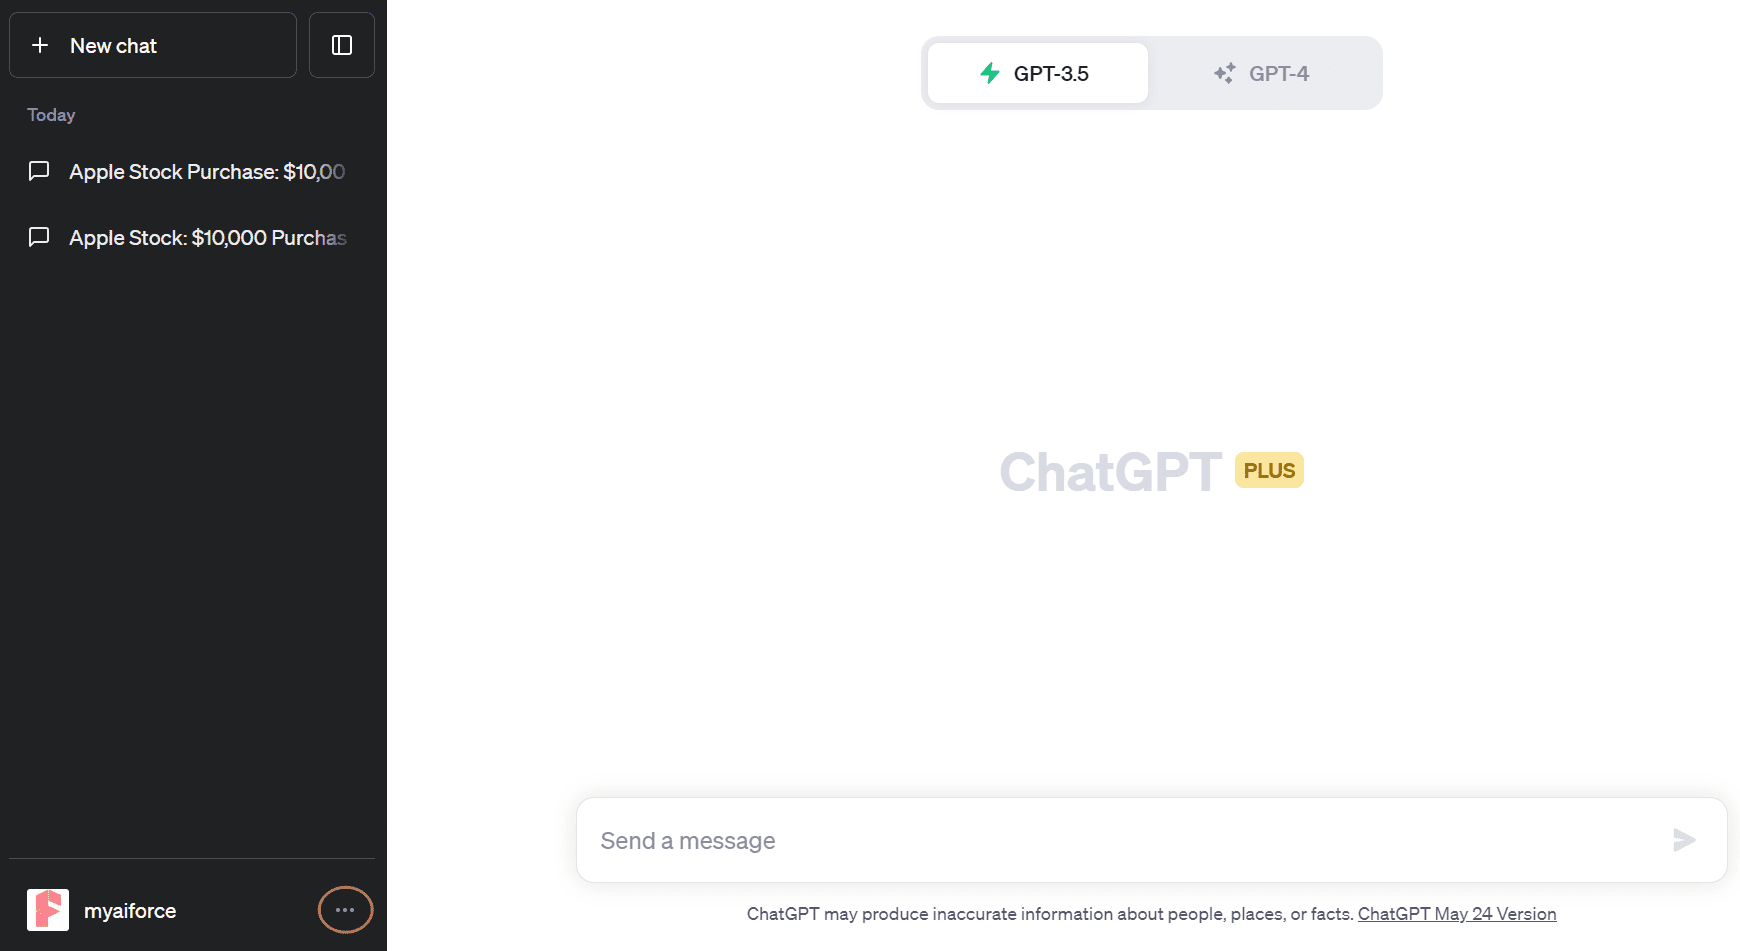 chatgpt user interface